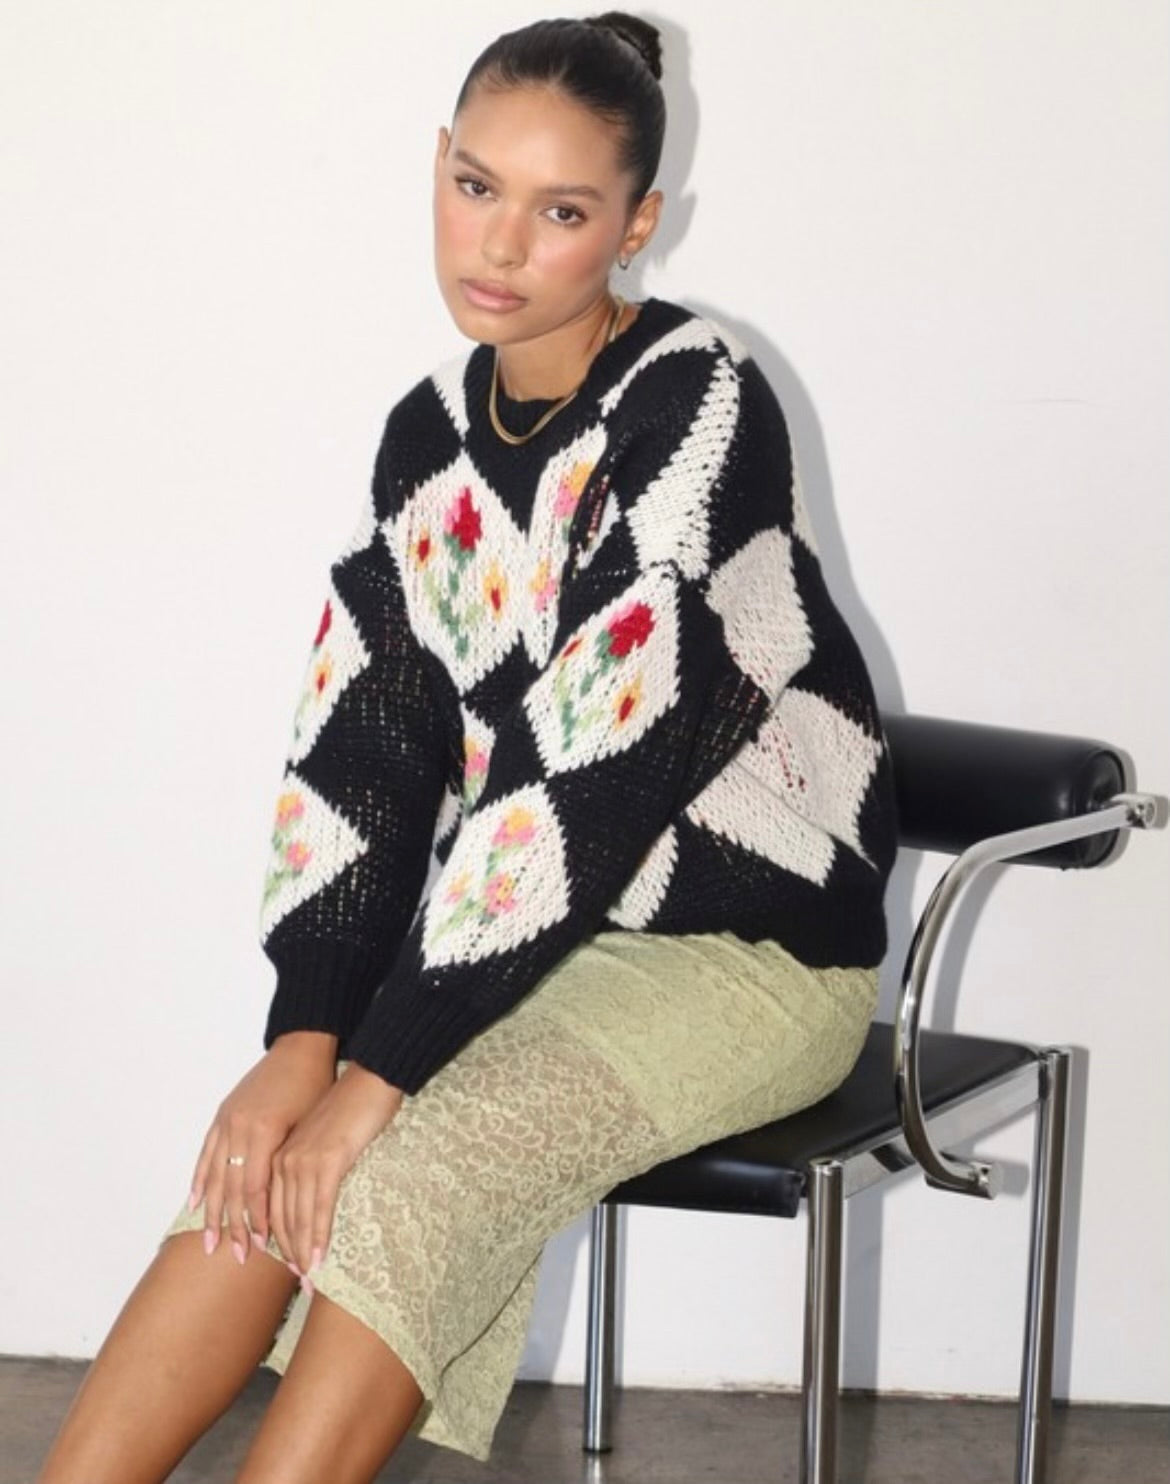 Vintage flower pattern sweater